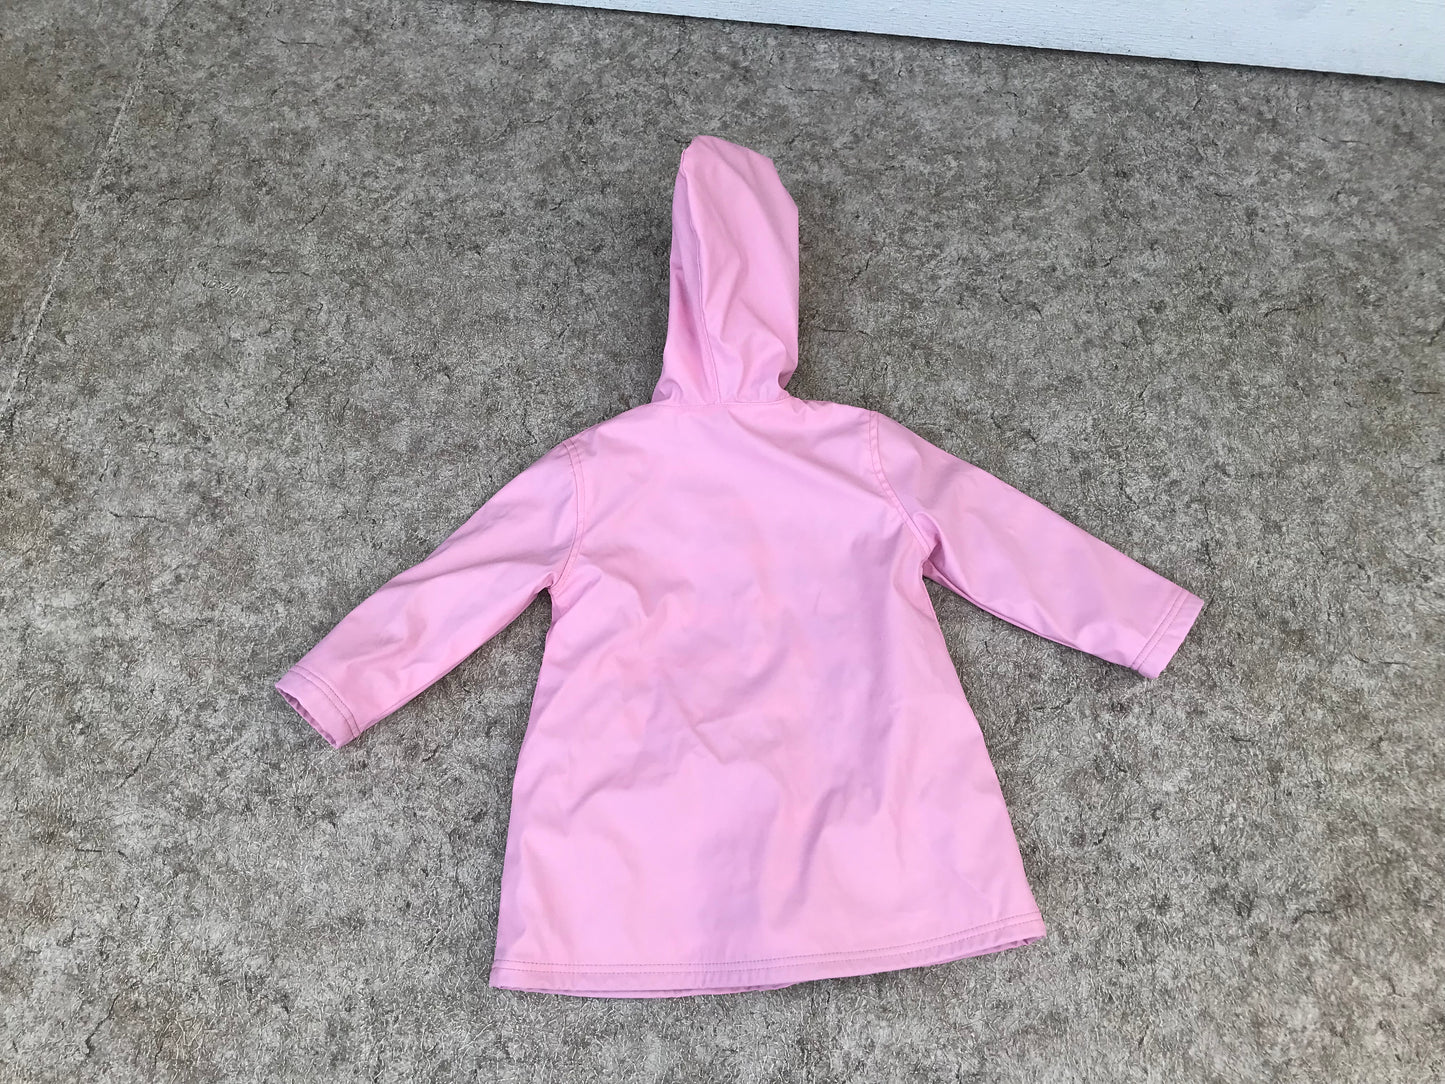 Rain Coat Child Size 4 Hatley Pink Navy and White